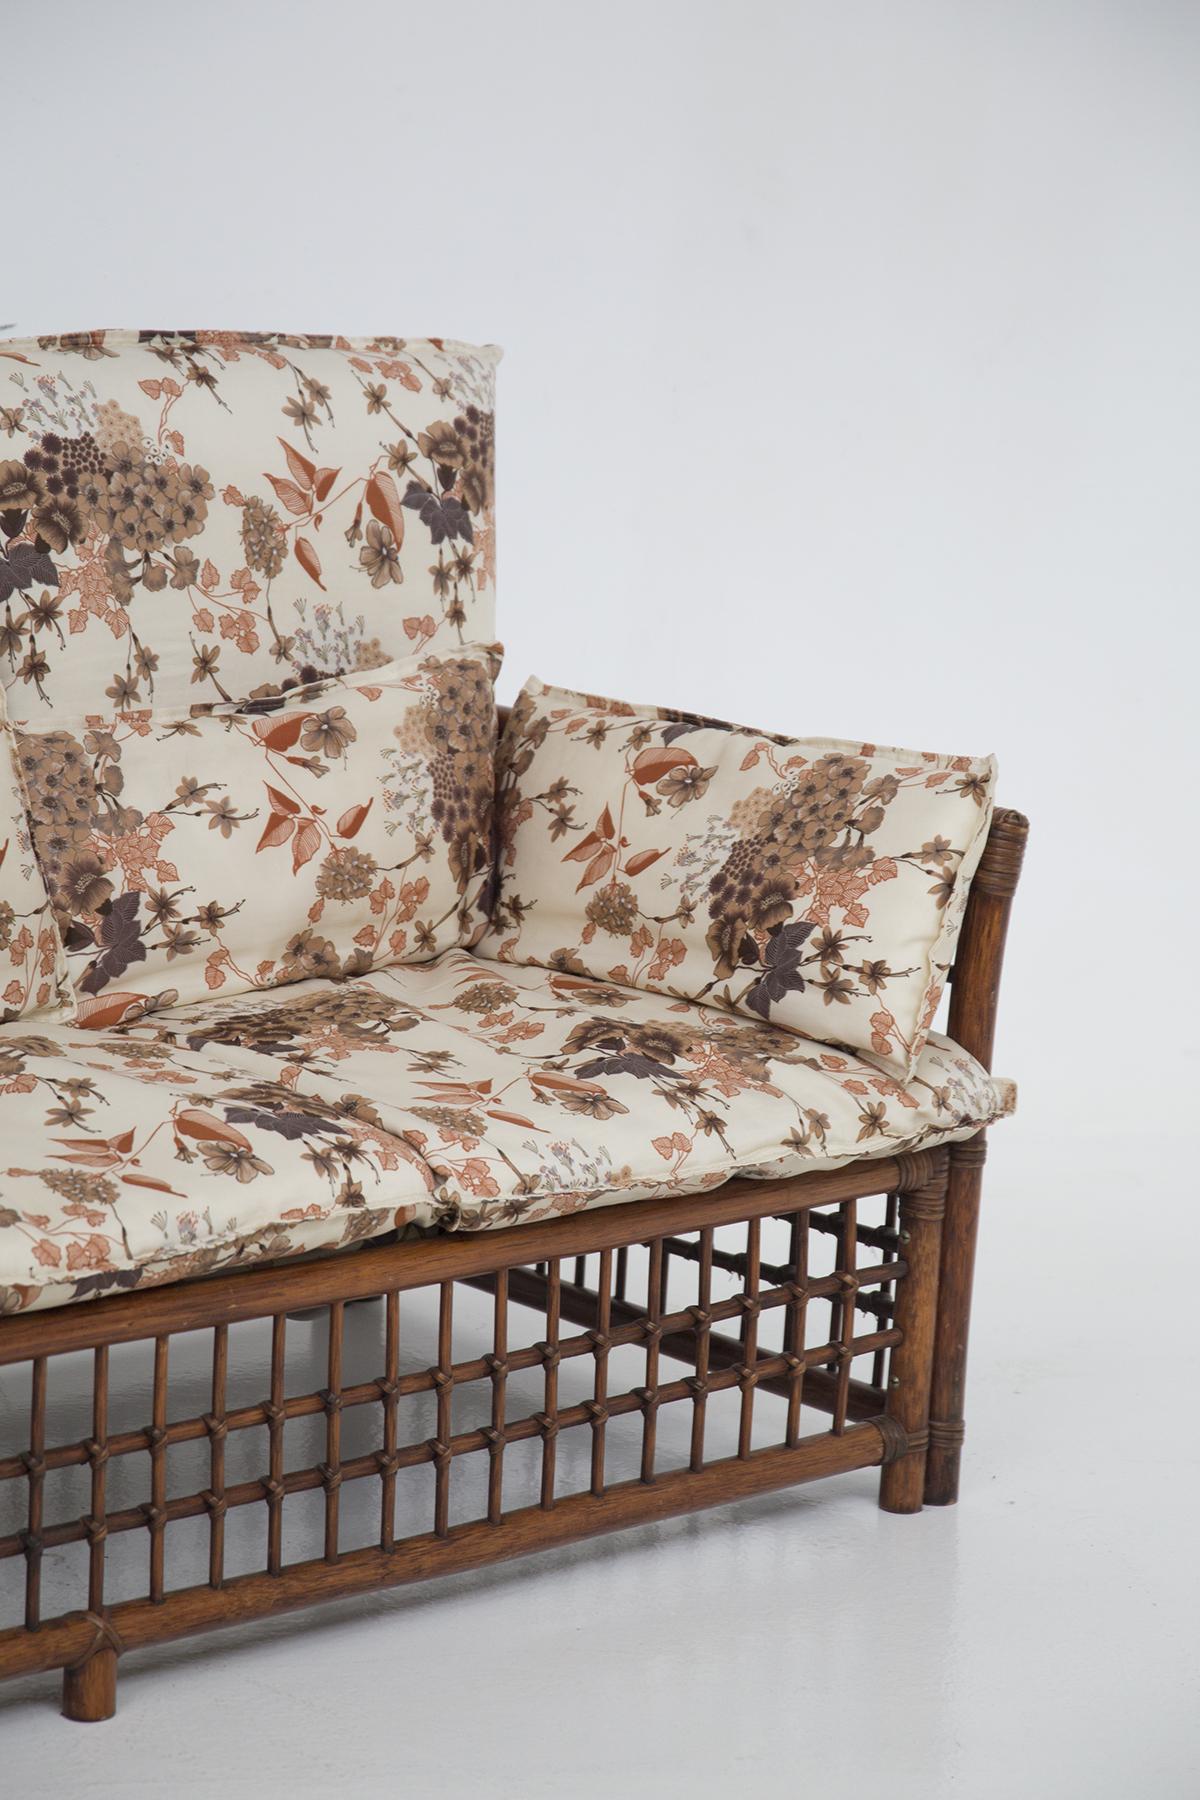 zweisitzer-sofa aus rattan -china -b2b -forum -blog -wikipedia -.cn -.gov -alibaba